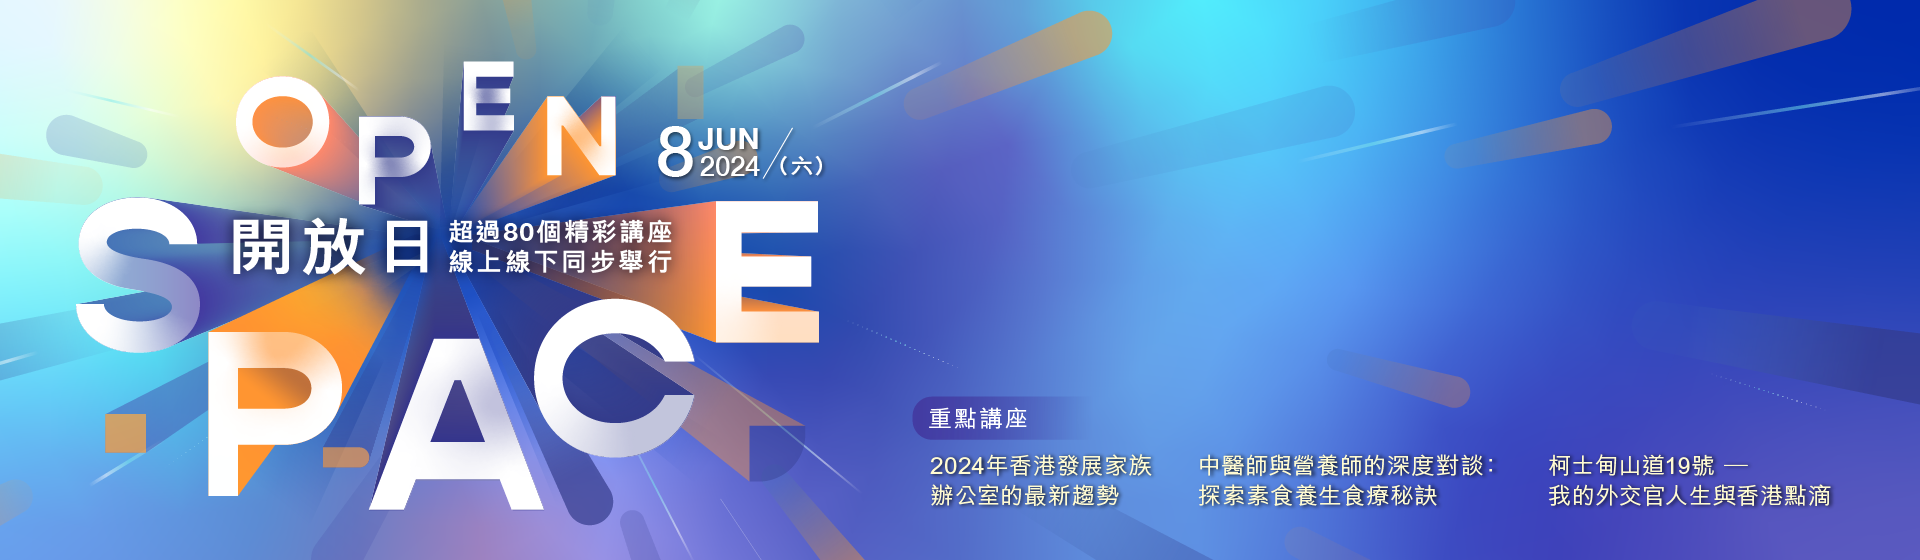 HKU SPACE OPEN SPACE 開放日 六月八日 星期六 超過80個精彩講座線上線下同步舉行